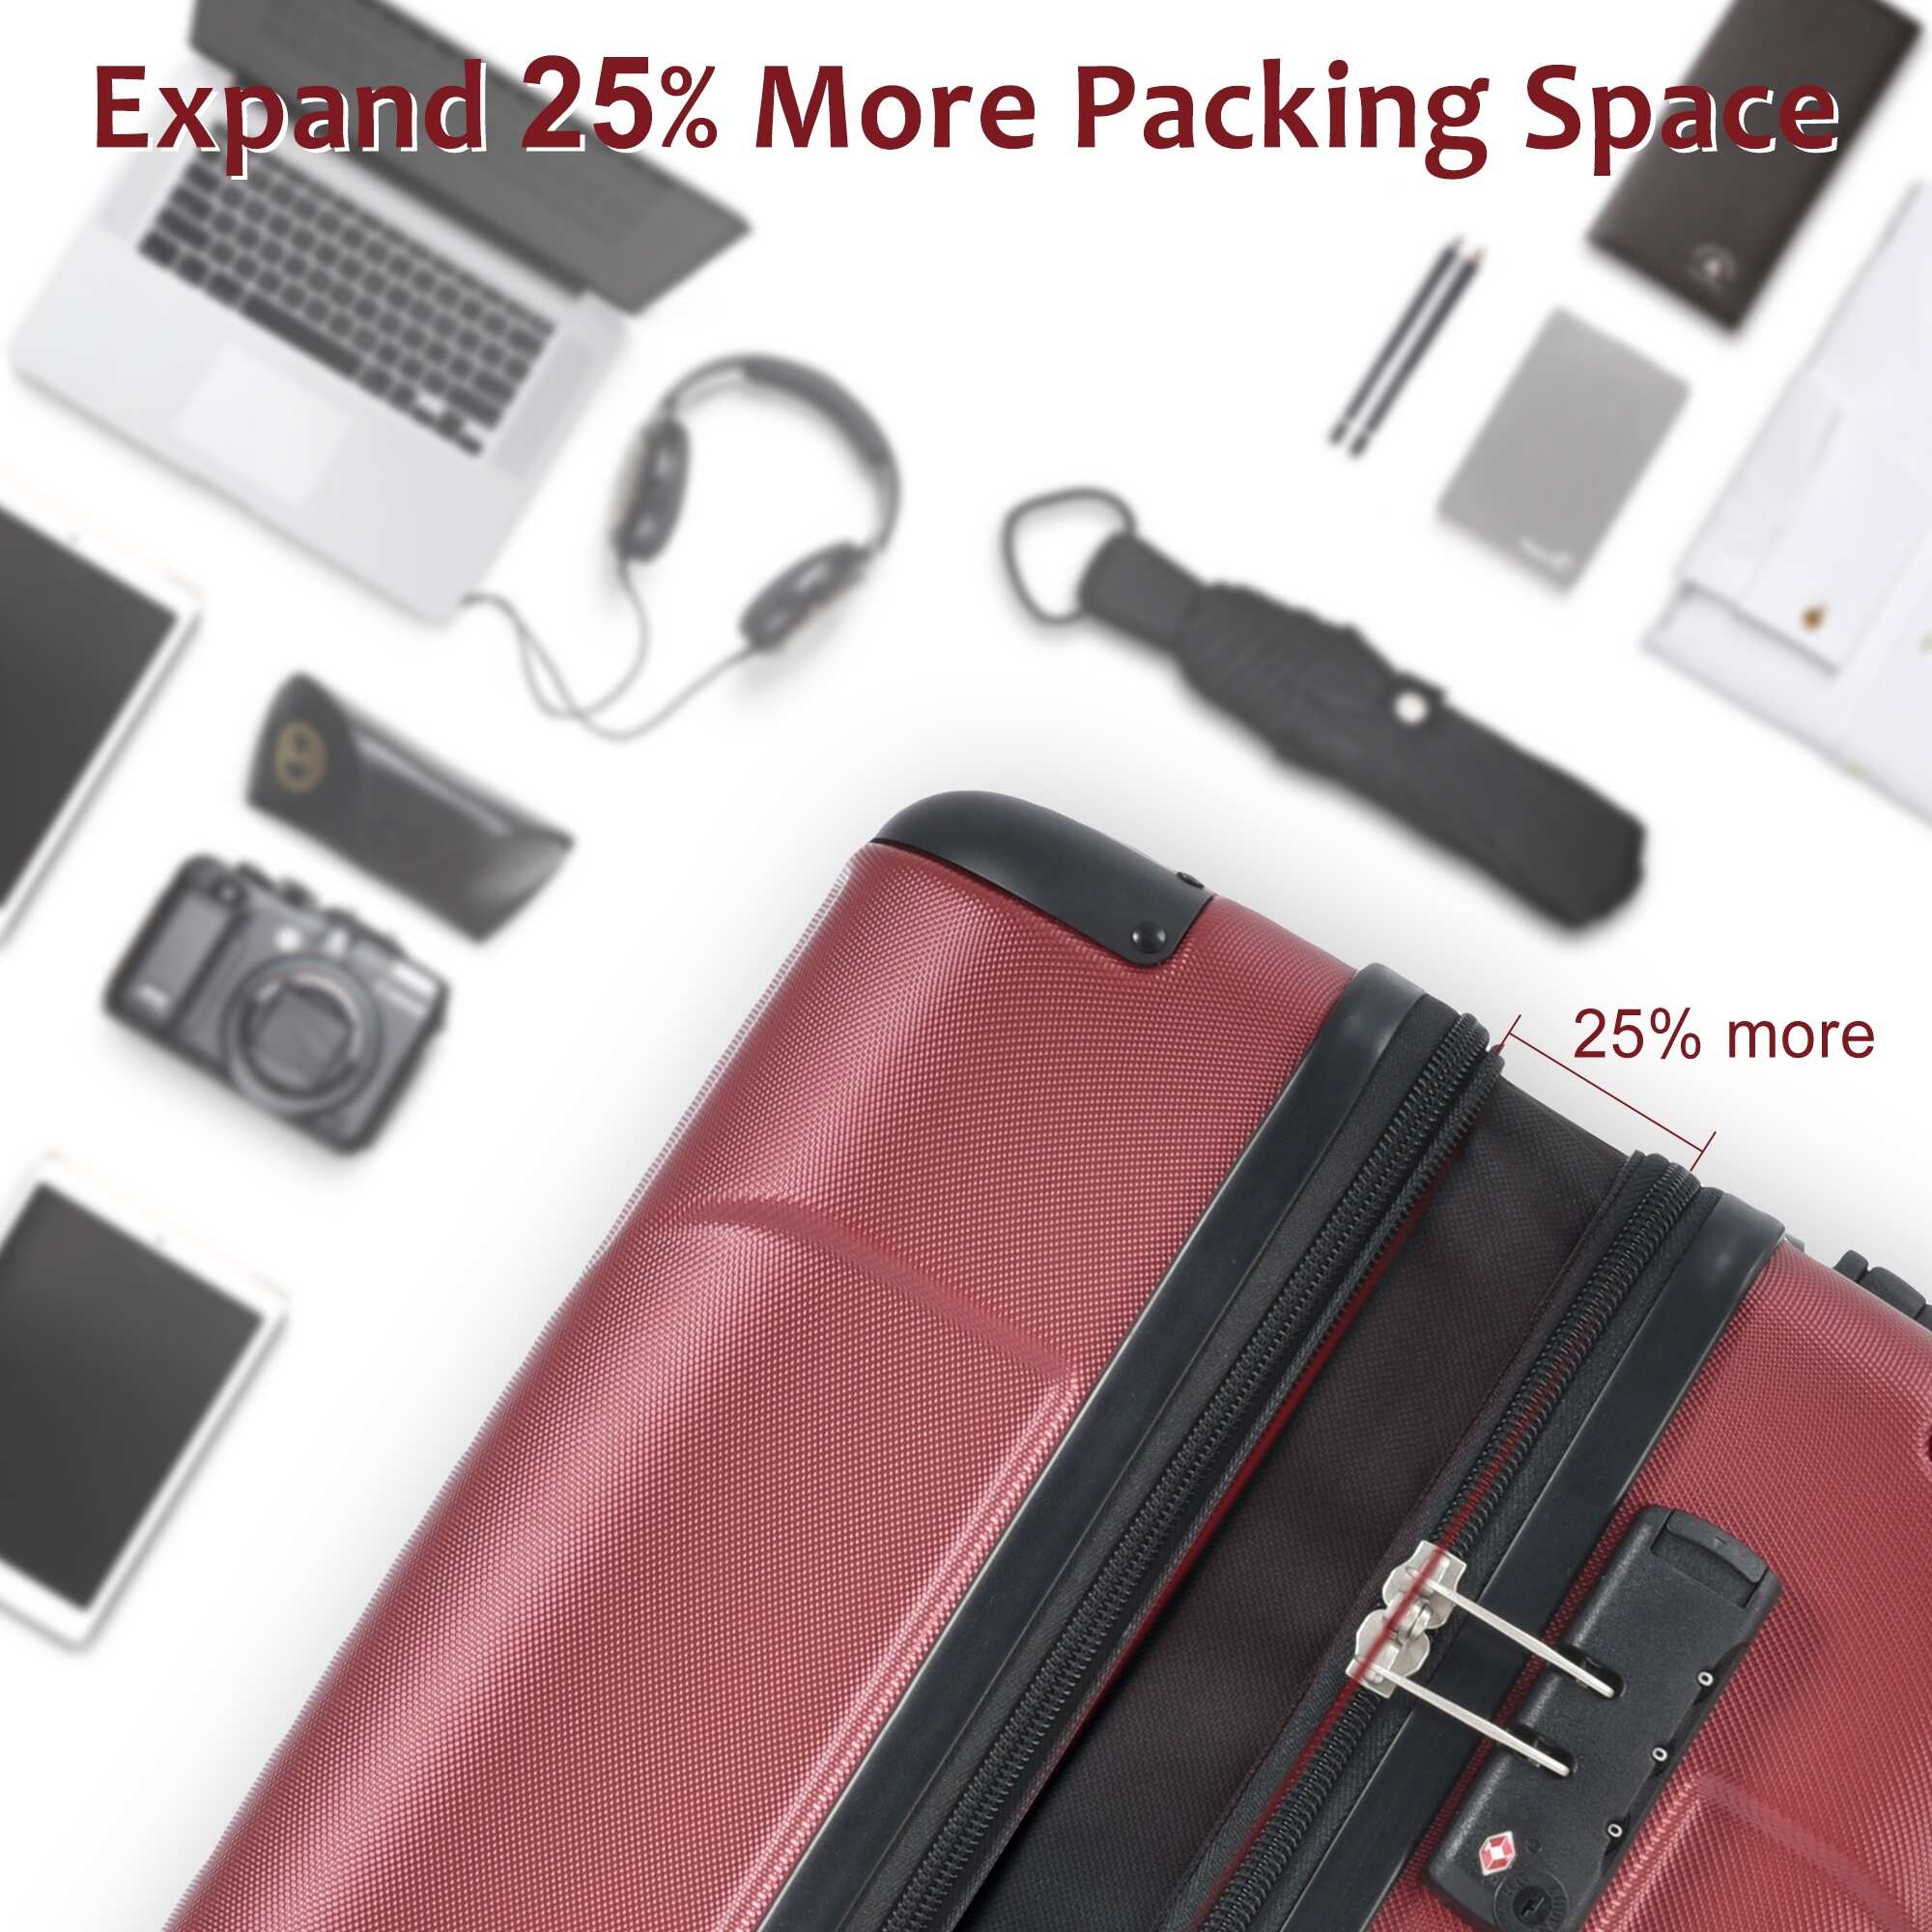 Hardside Luggage Sets 2 Piece Suitcase Set Expandable with TSA Lock Spinner Wheels for Men Women